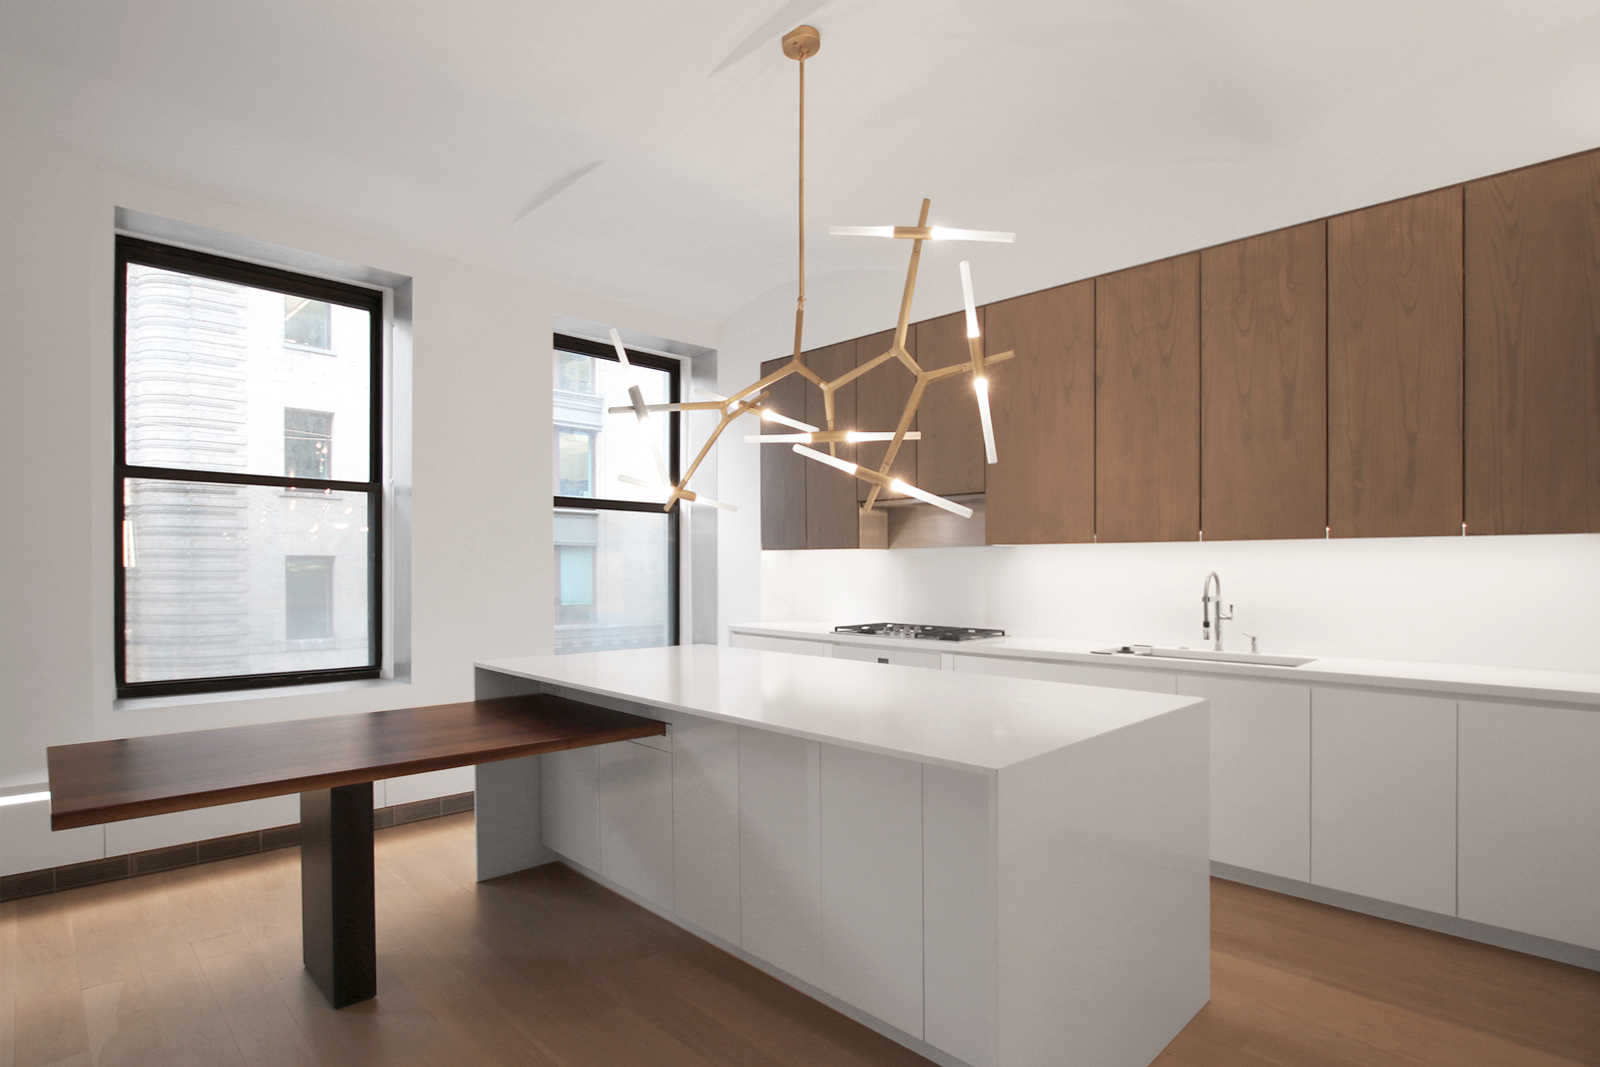 03_res4-resolution-4-architecture-modern-residential-brownstone-renovation-west-16th-street-apartment-interior-kitchen-1.jpg